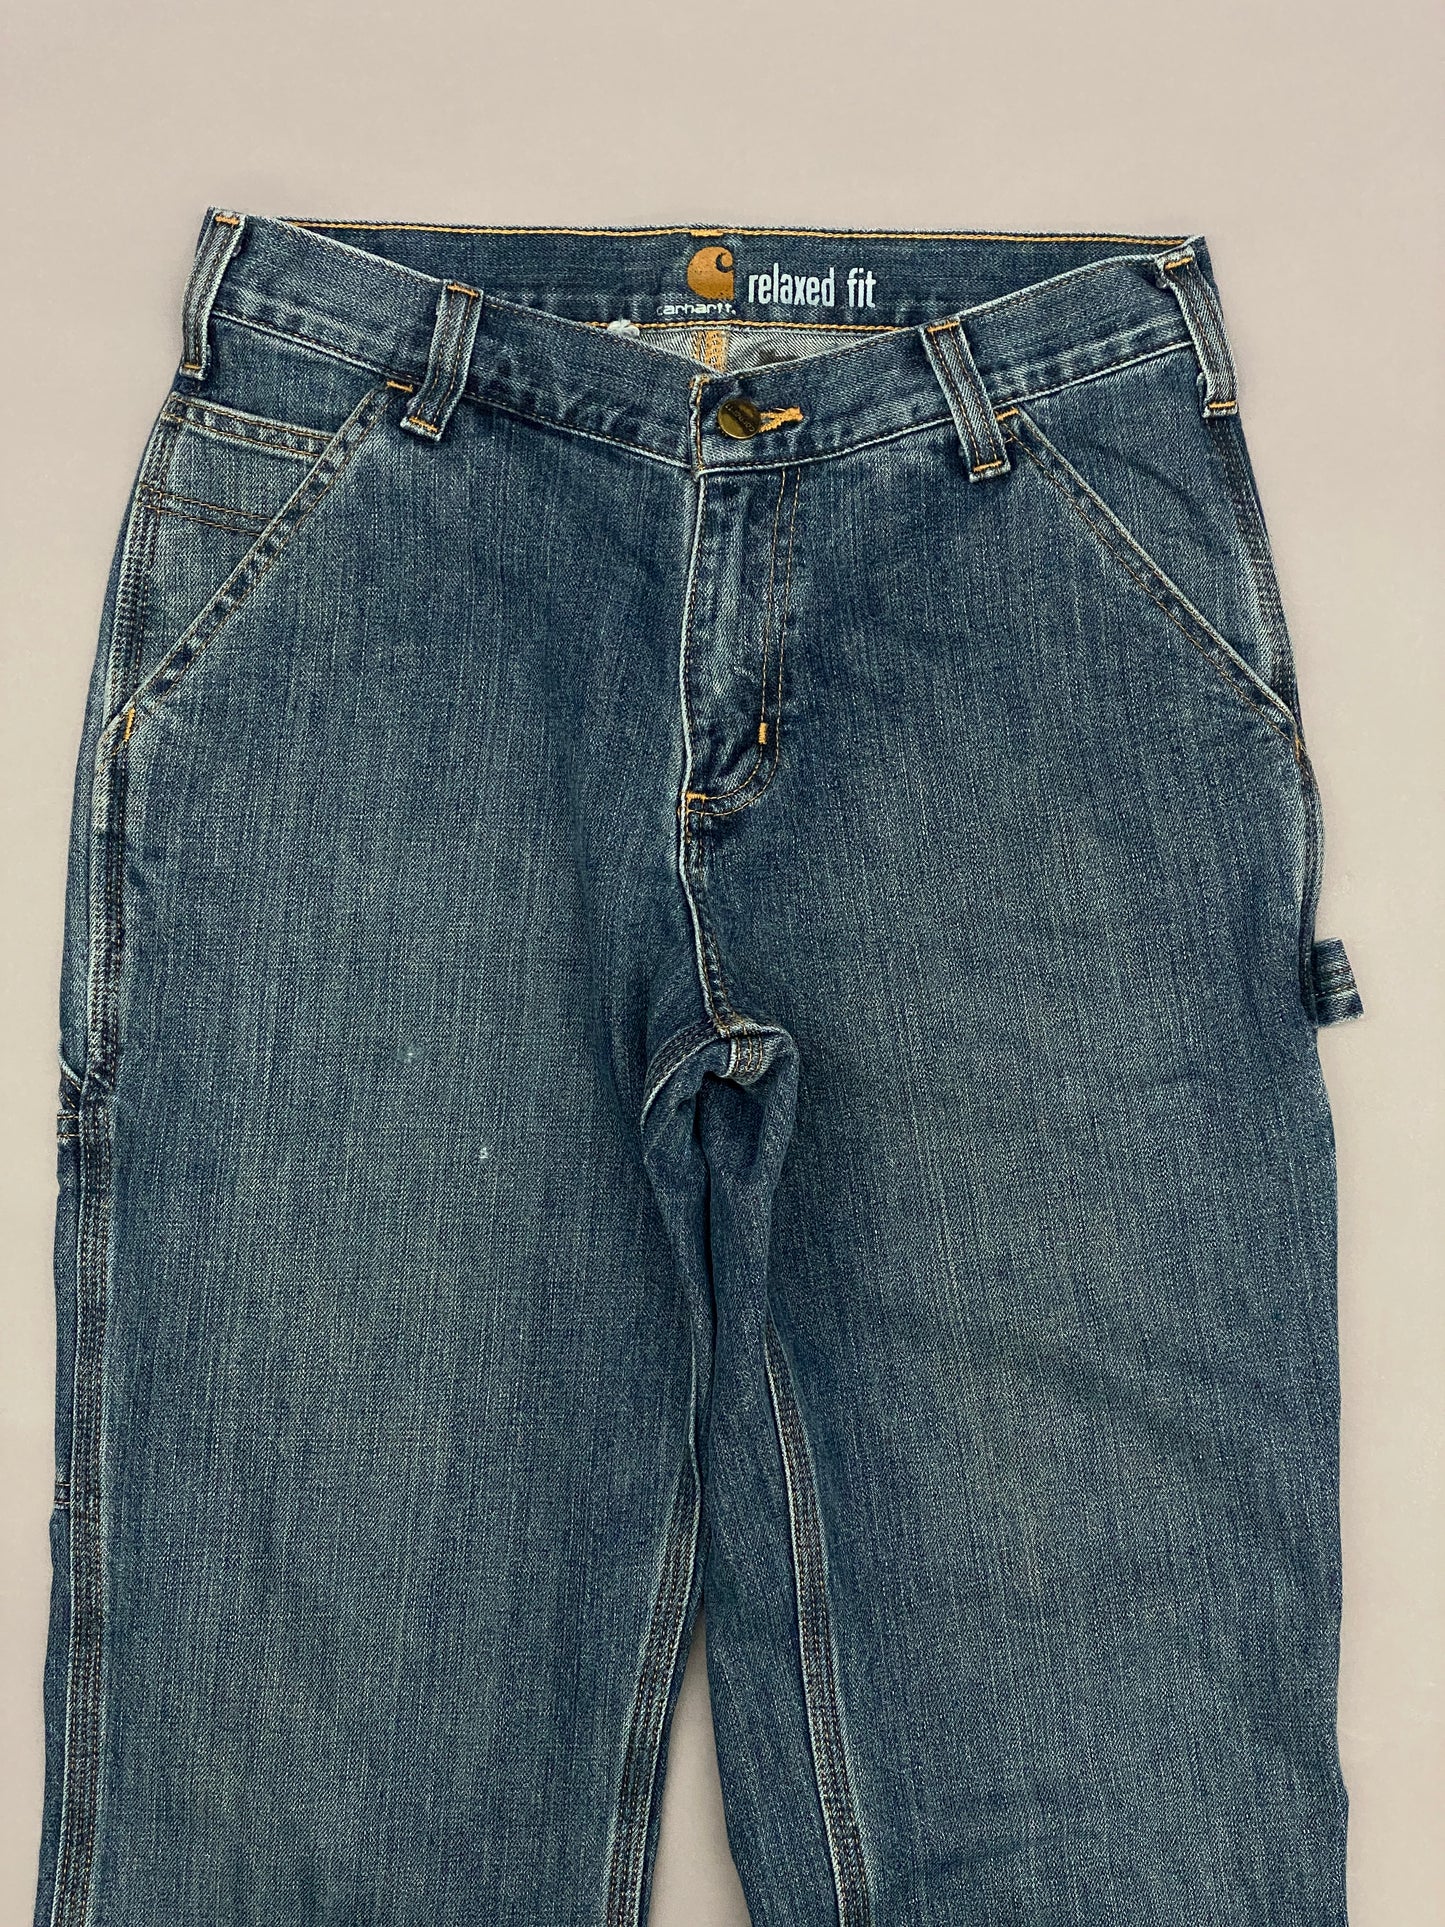 Carhartt Jeans Carpenter Pants - 32 x 30